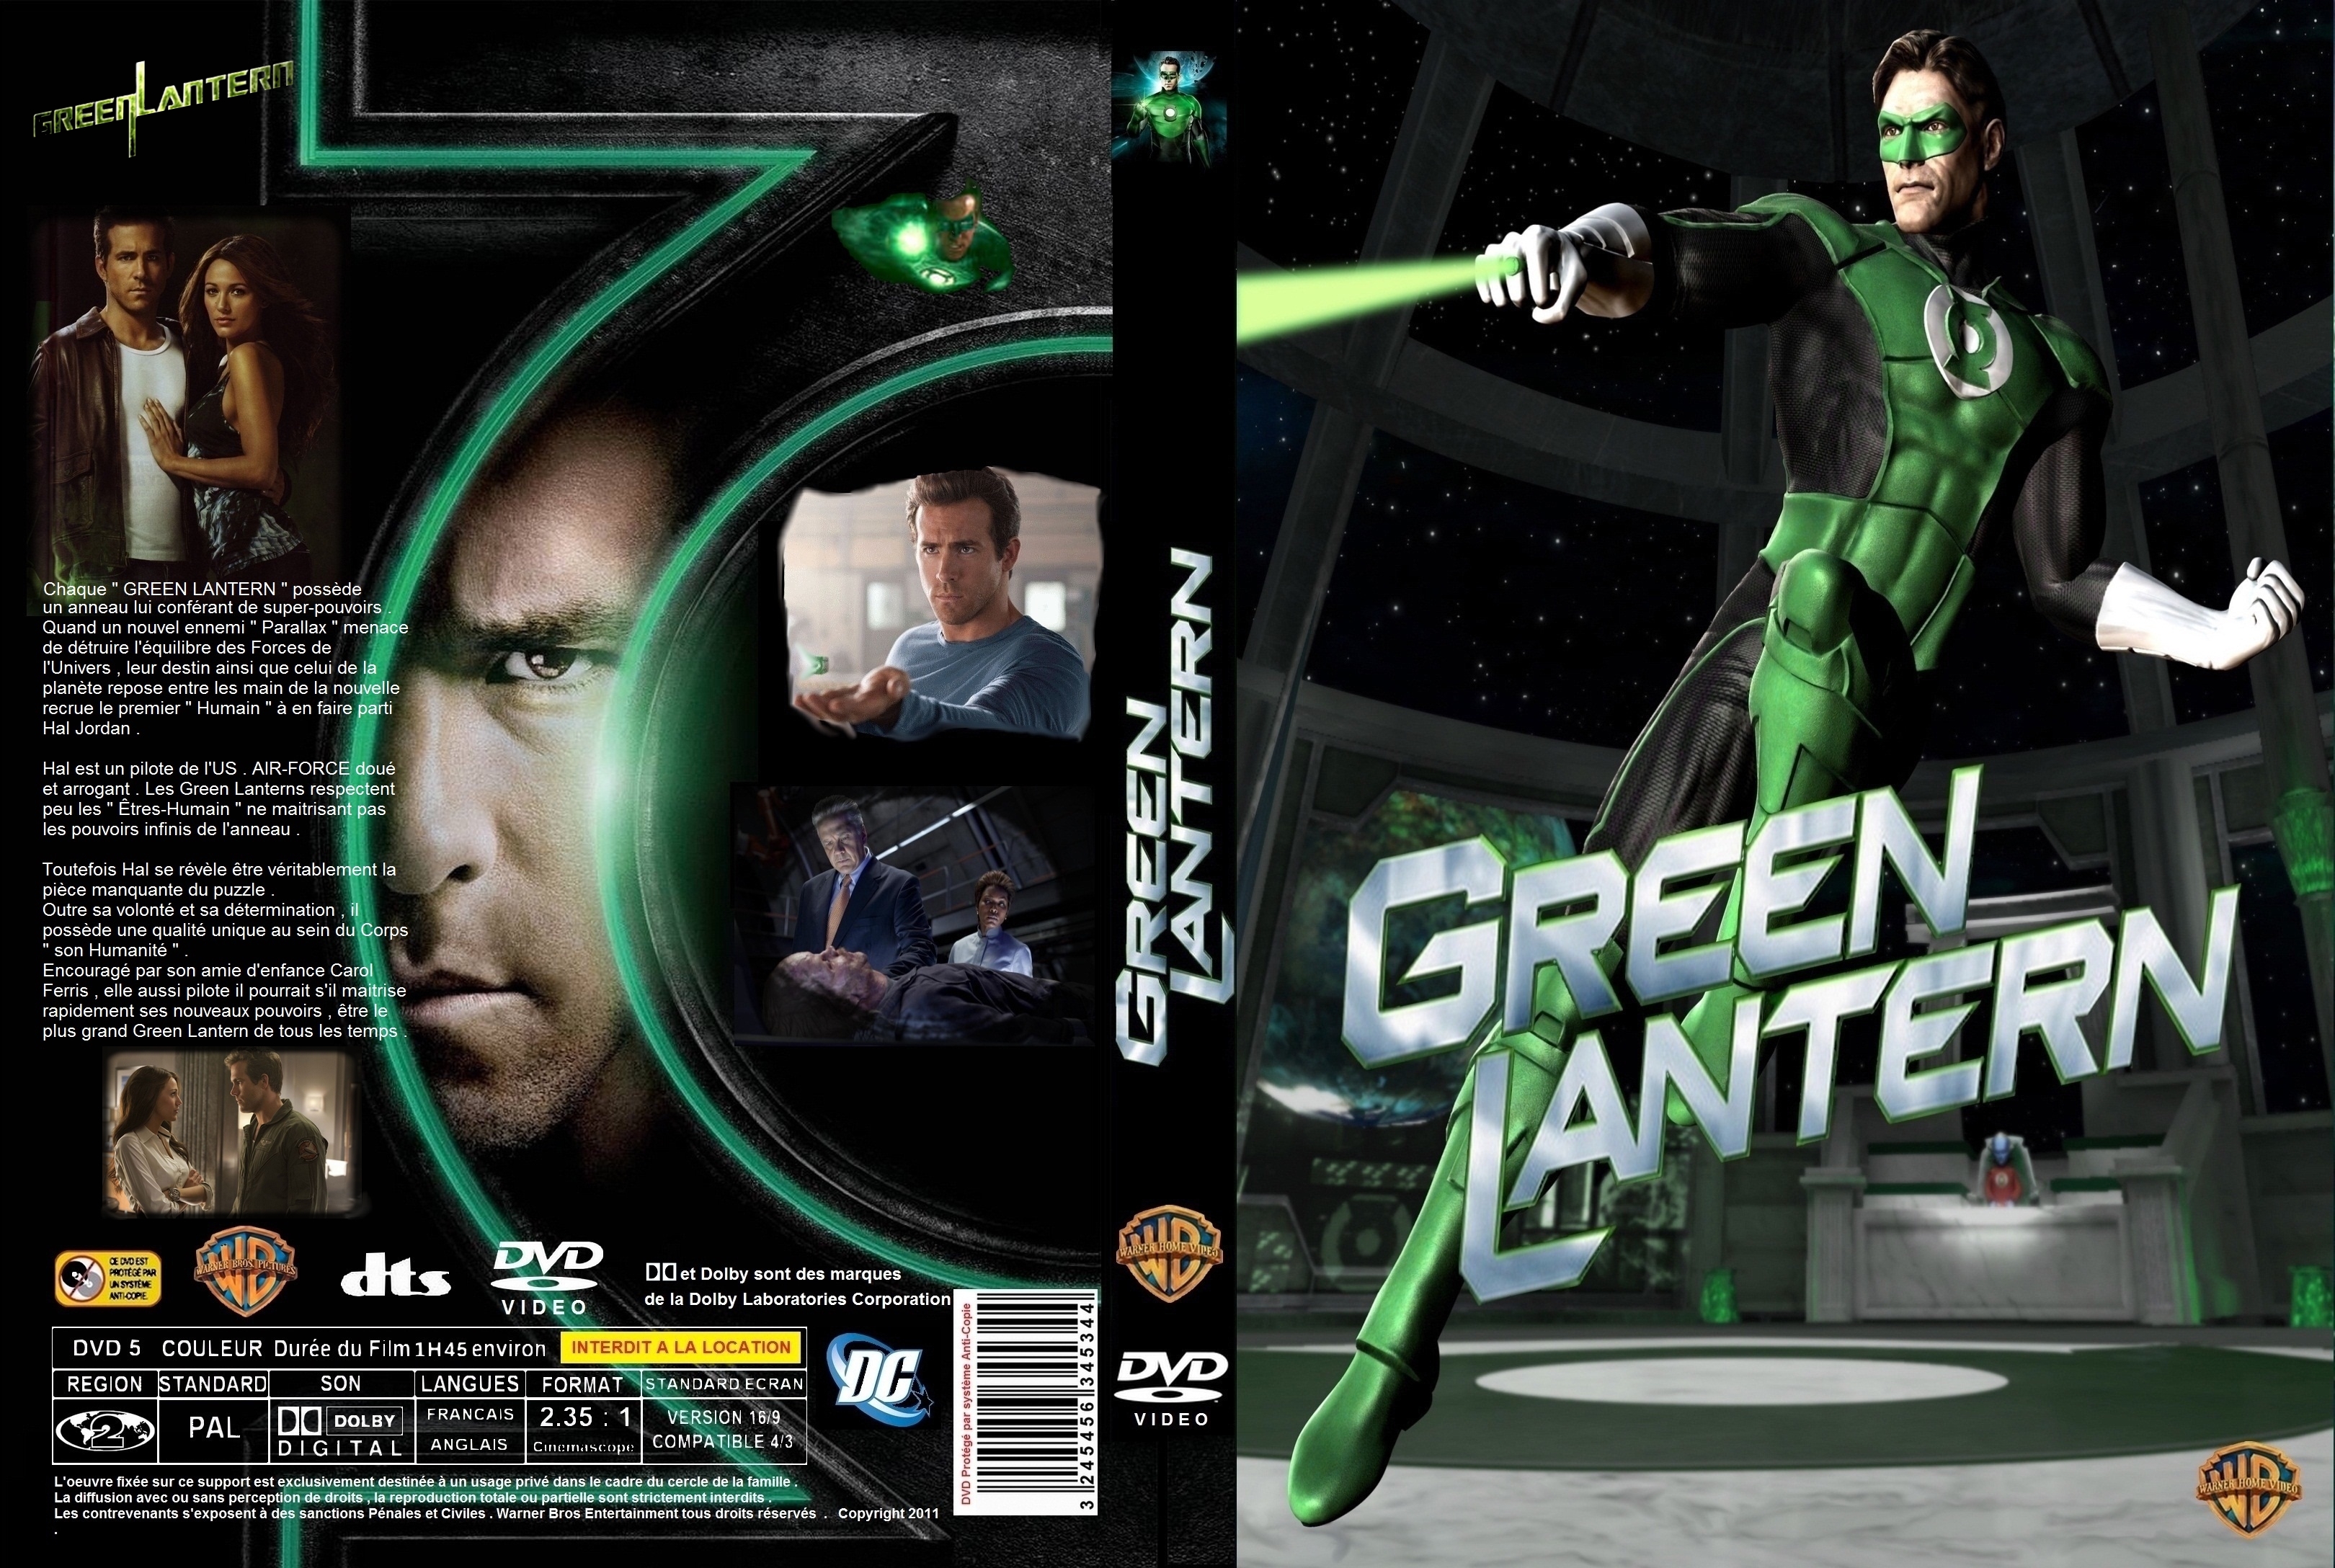 Jaquette DVD Green Lantern custom